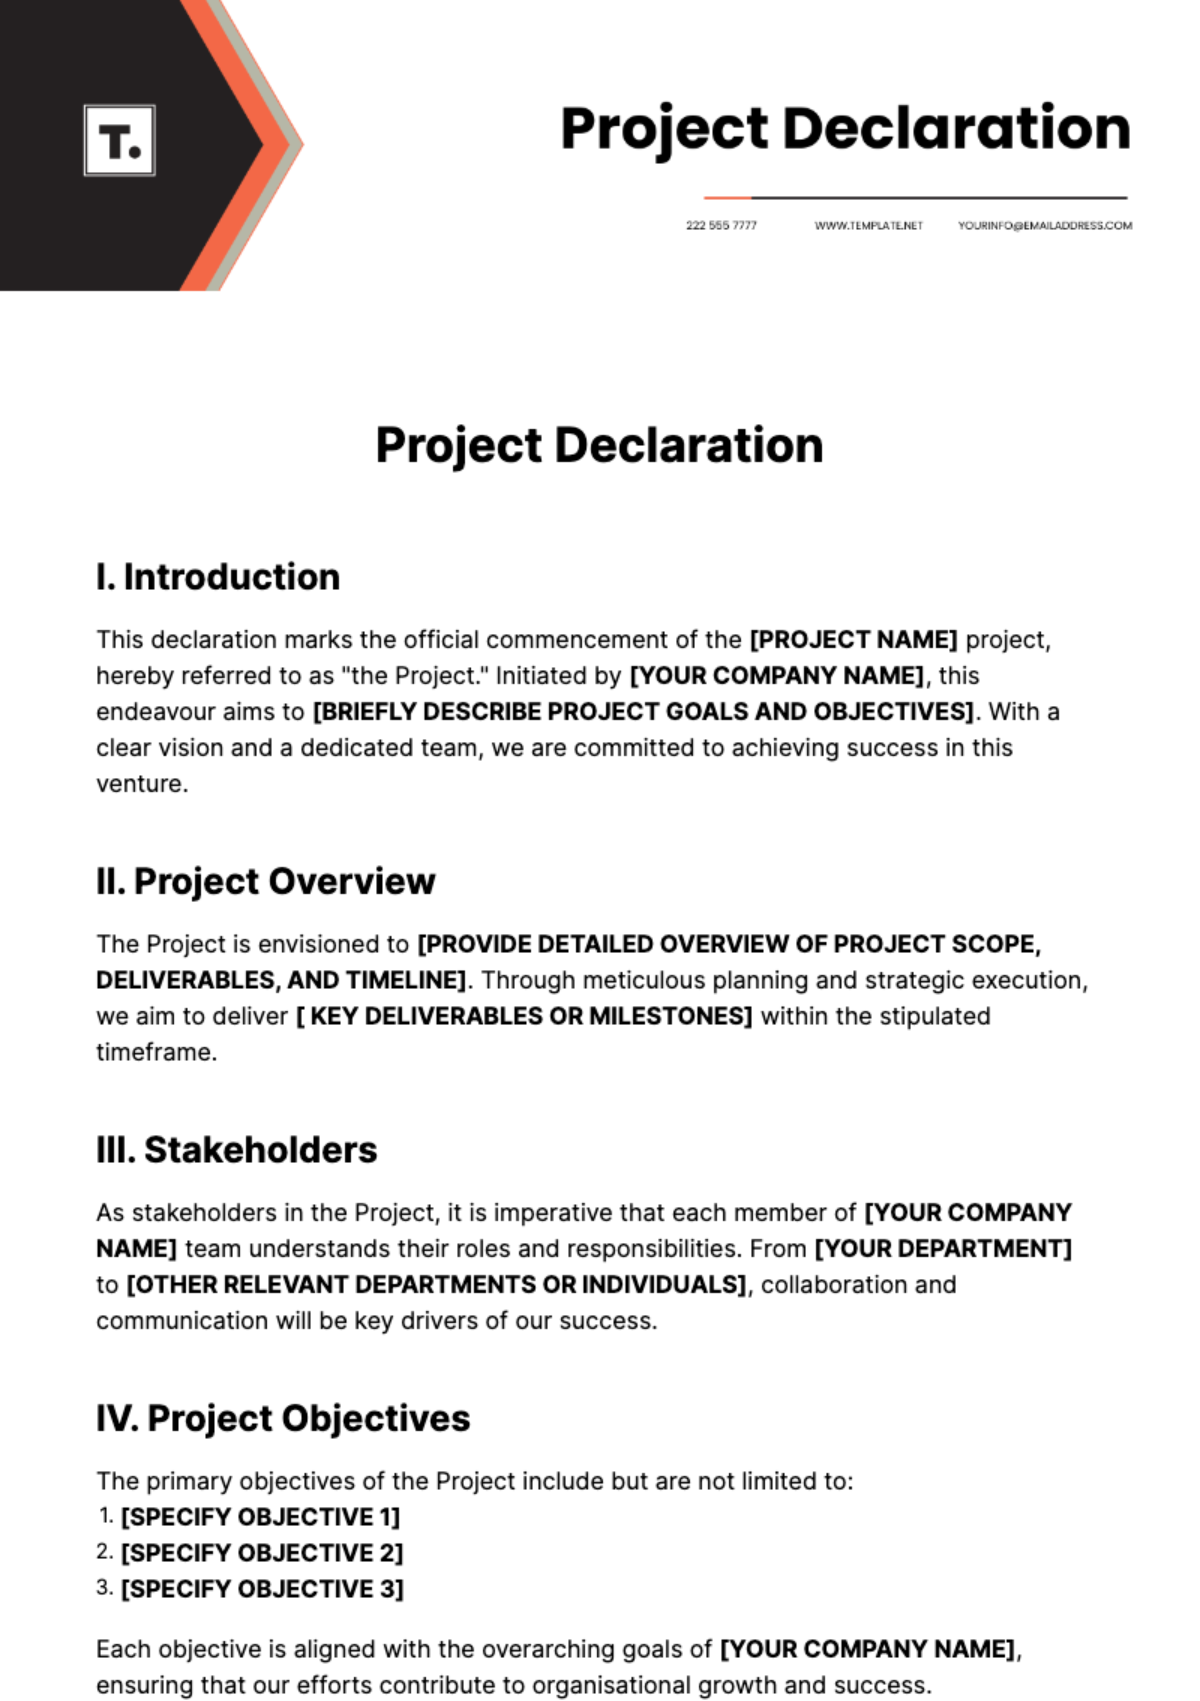 Project Declaration Template